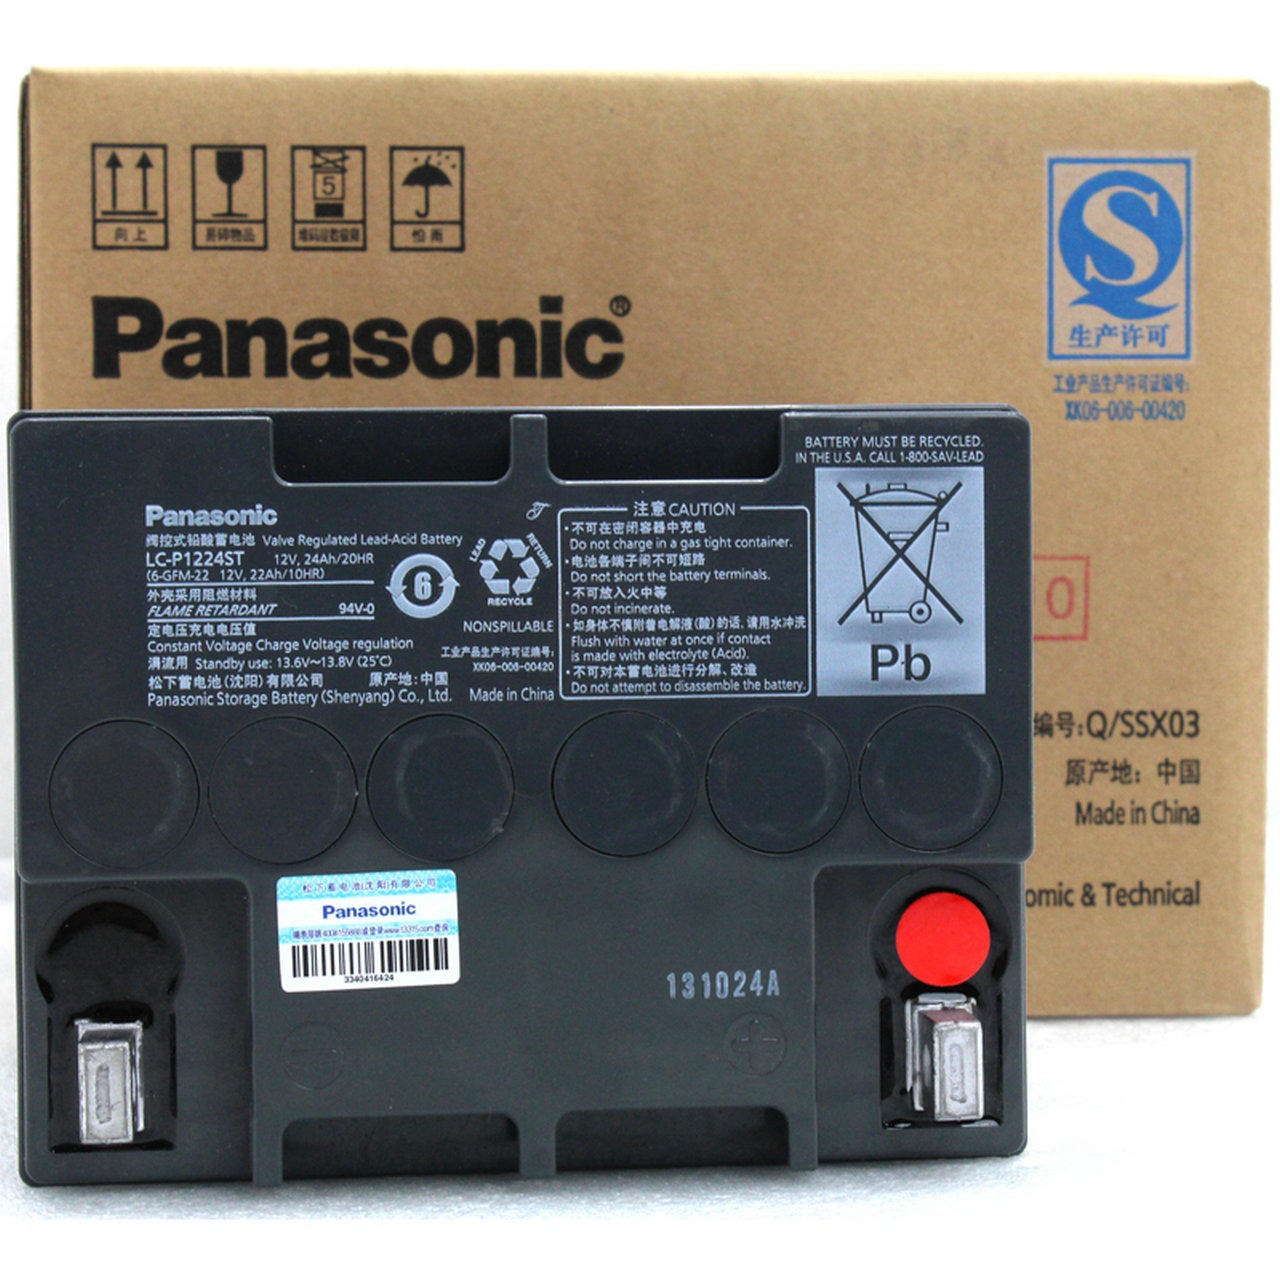 Panasonic松下蓄电池LC-P1224ST 松下蓄电池铅酸免维护12V24AH UPS电源,EPS直流屏,电力专用图片